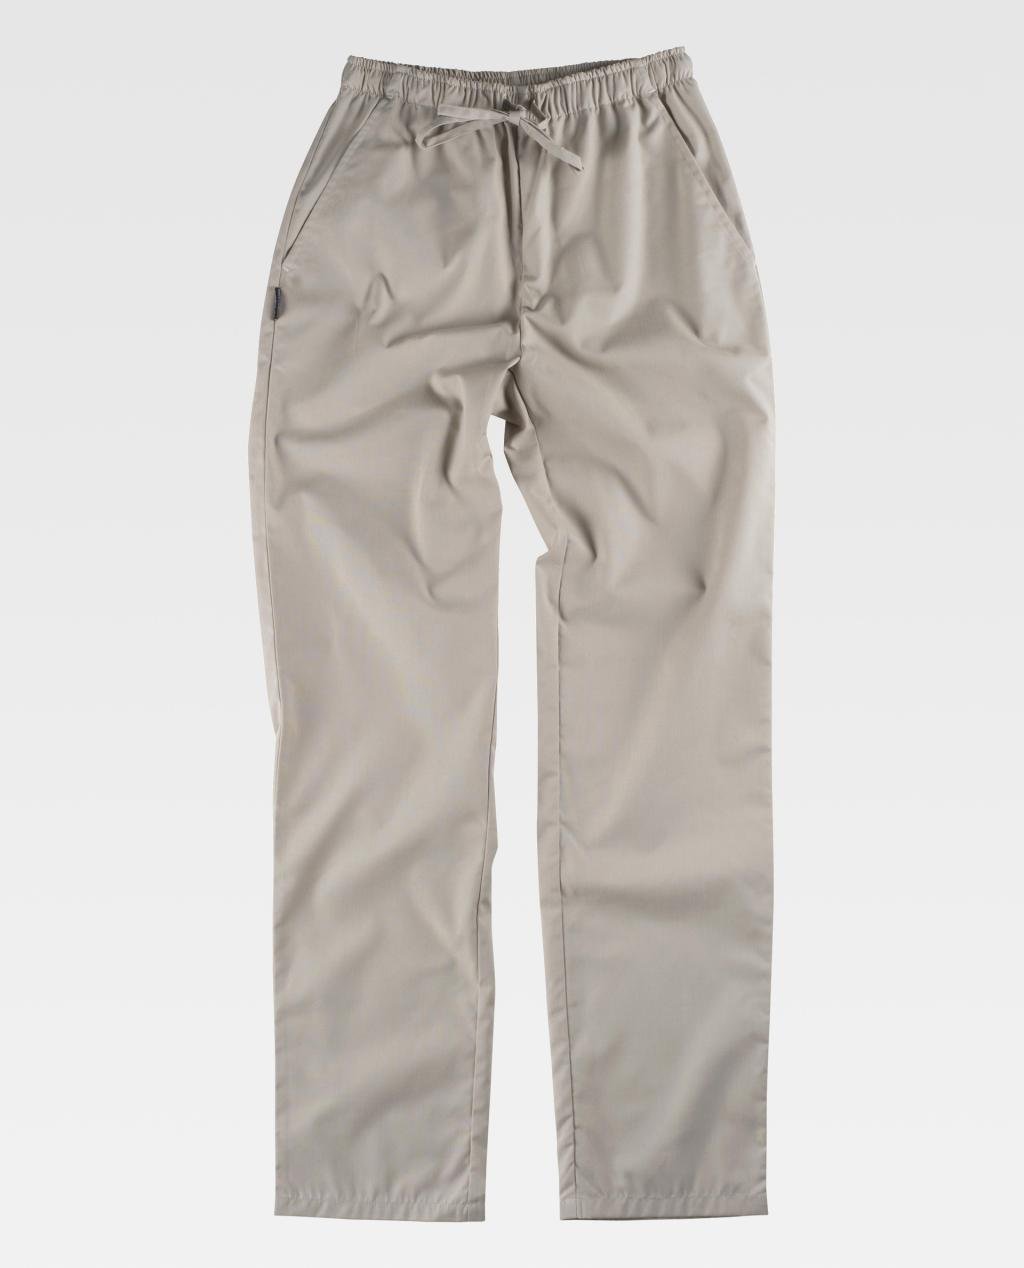 9_kit-pantalone-e-casacca-unisex.jpg